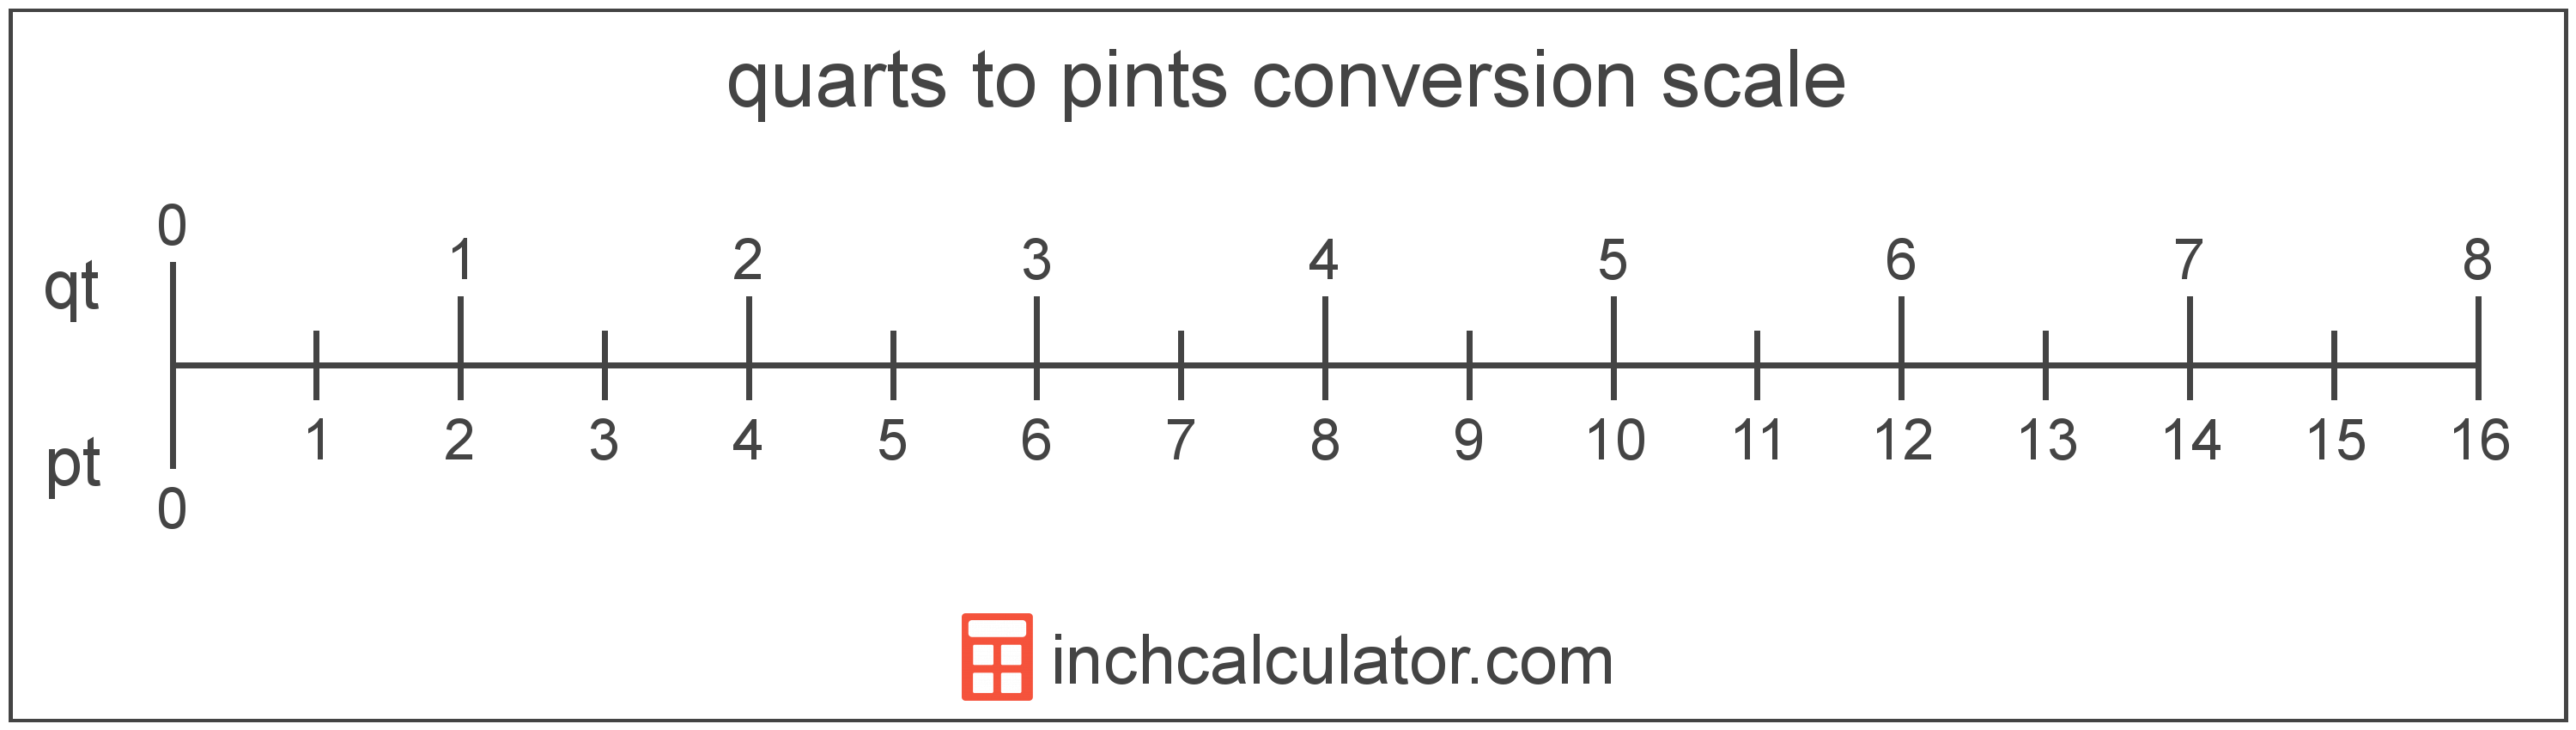 conversion scale showing quarts and equivalent pints volume values